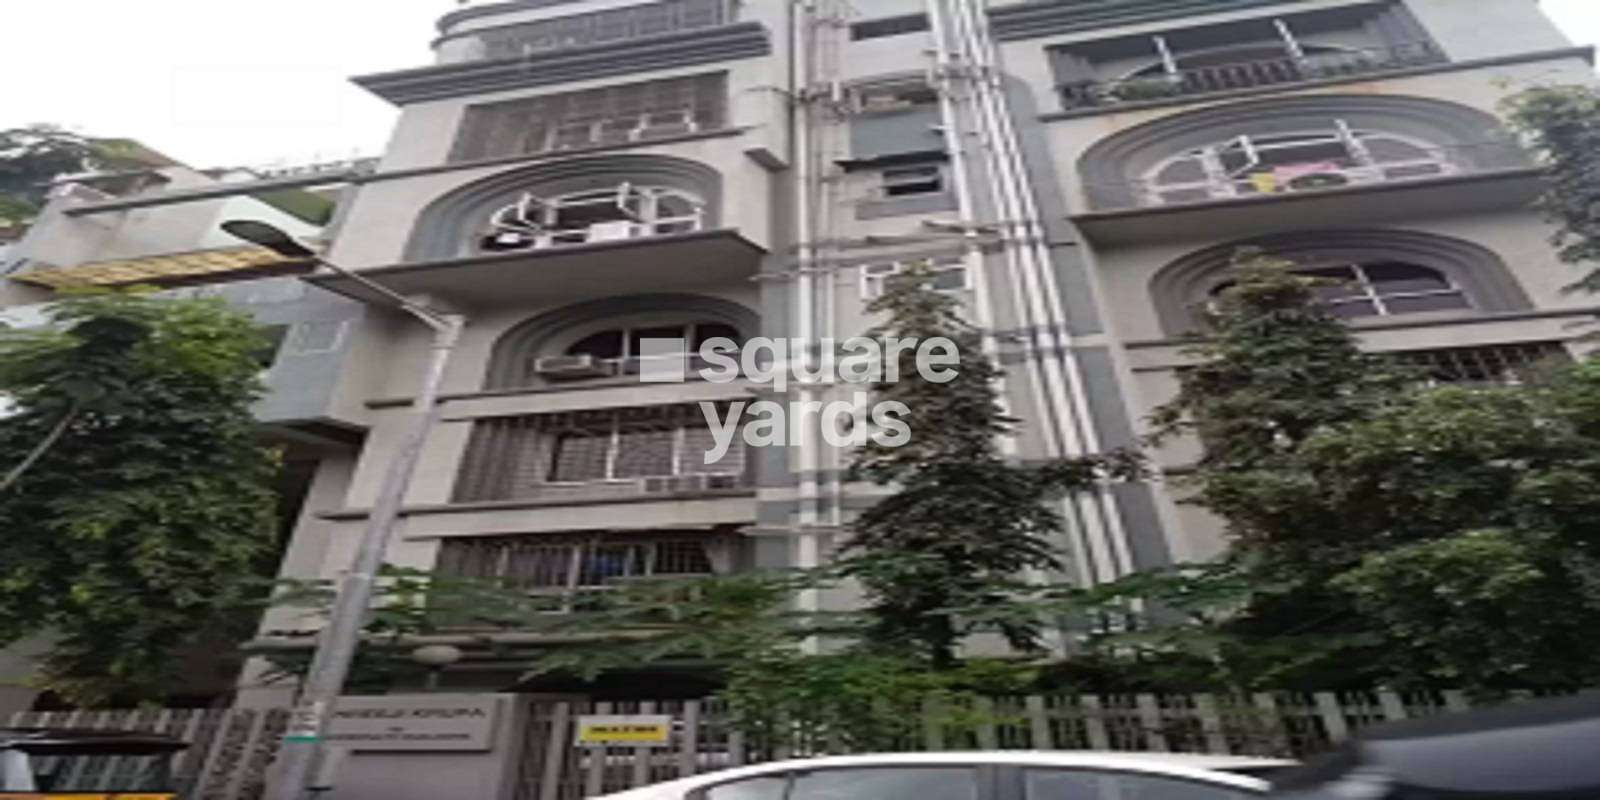 Shreeji Krupa Apartment Cover Image